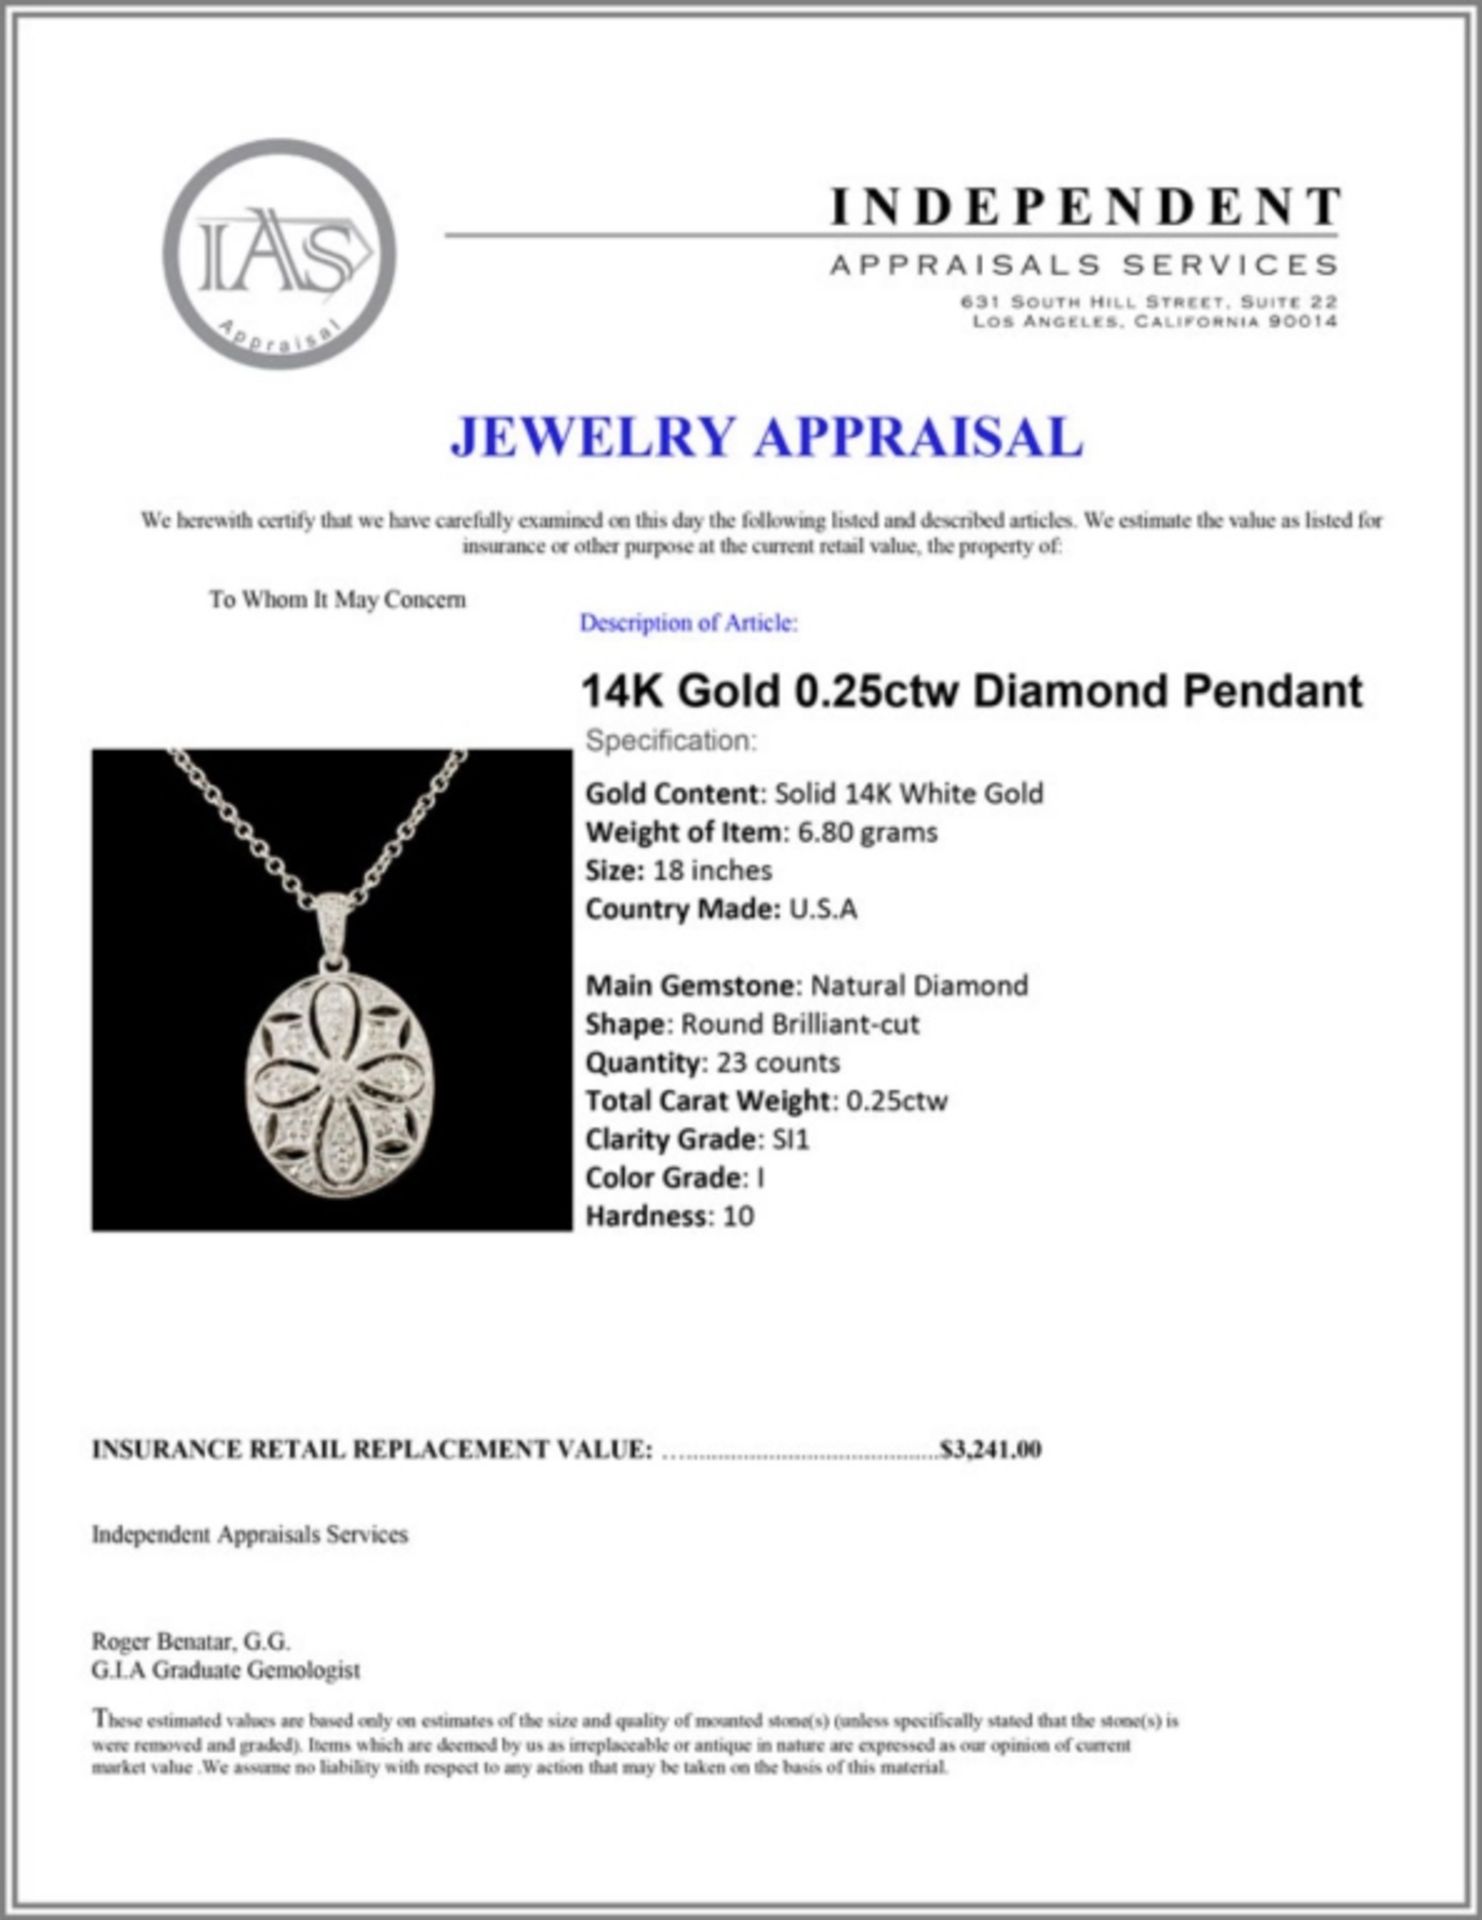 14K Gold 0.25ctw Diamond Pendant - Image 4 of 4